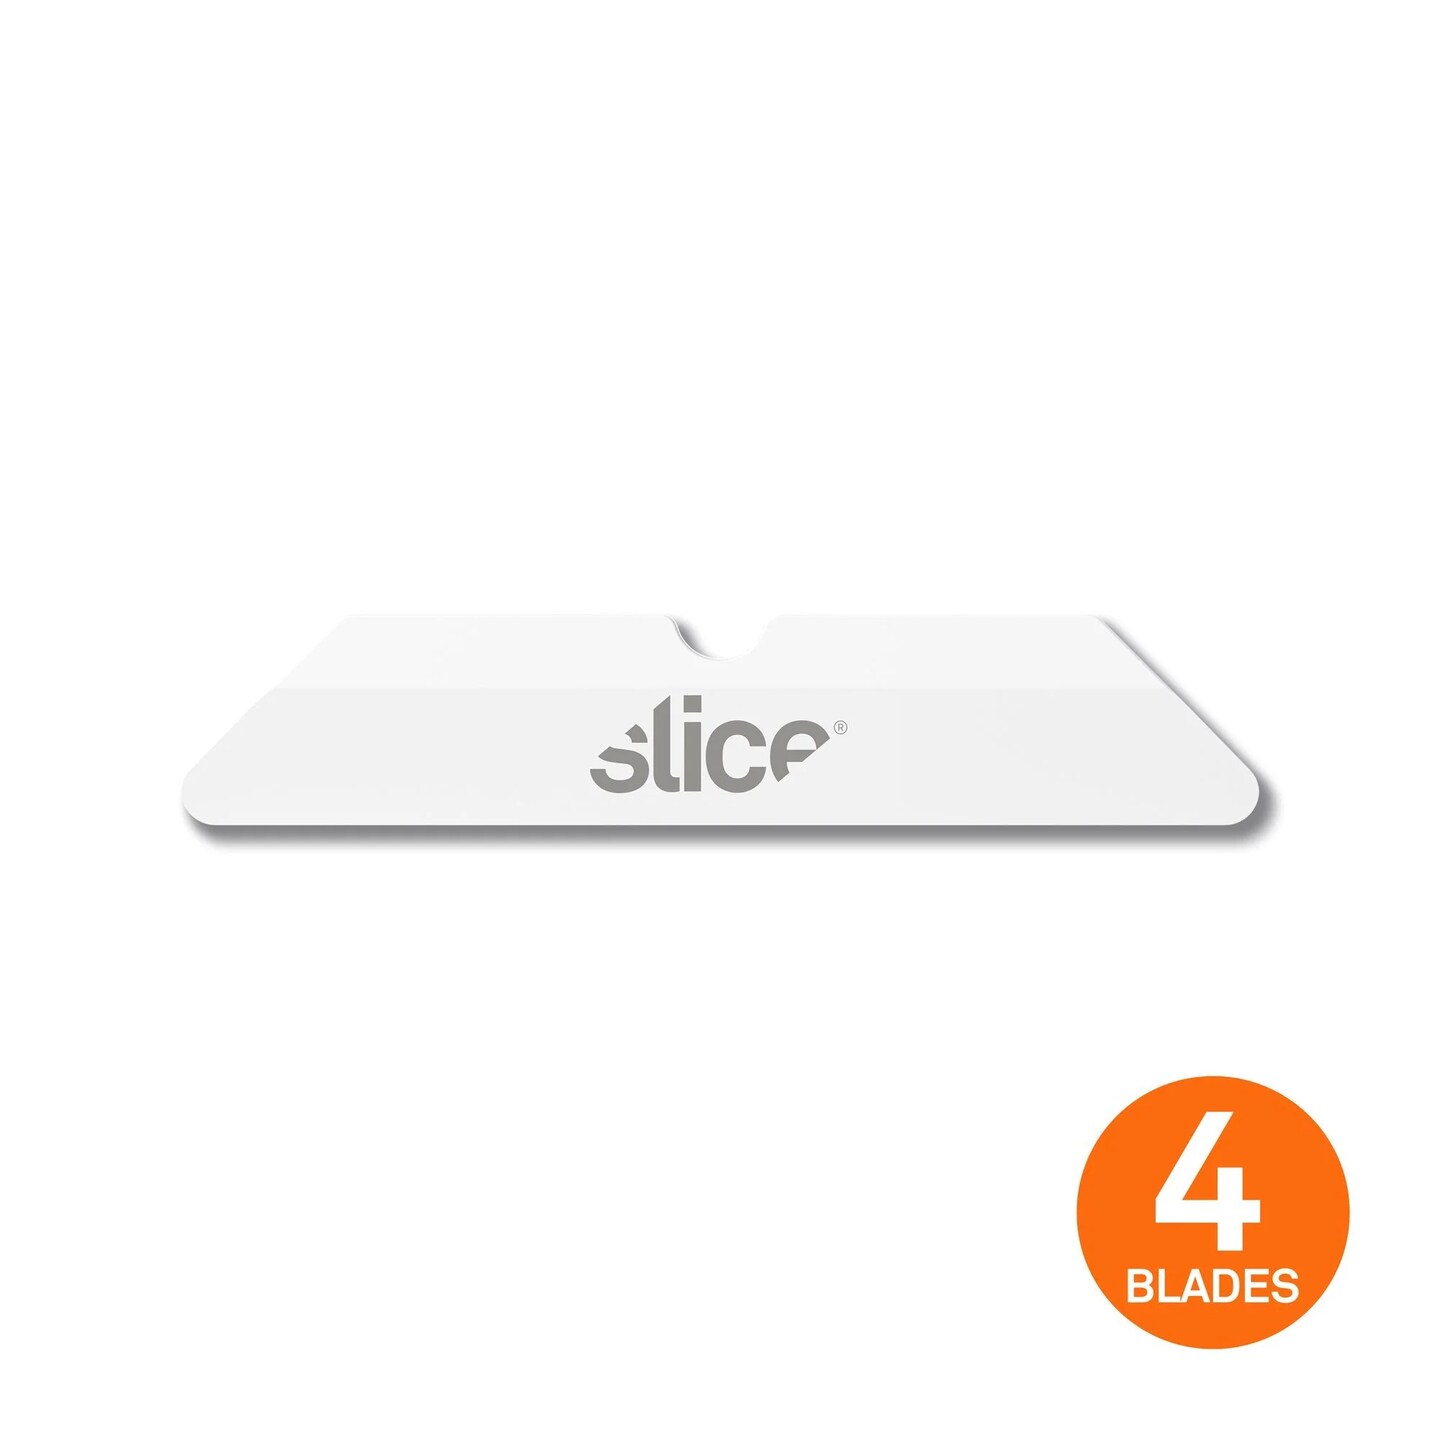 Slice Box Cutter, Retractable Ceramic Box Cutter